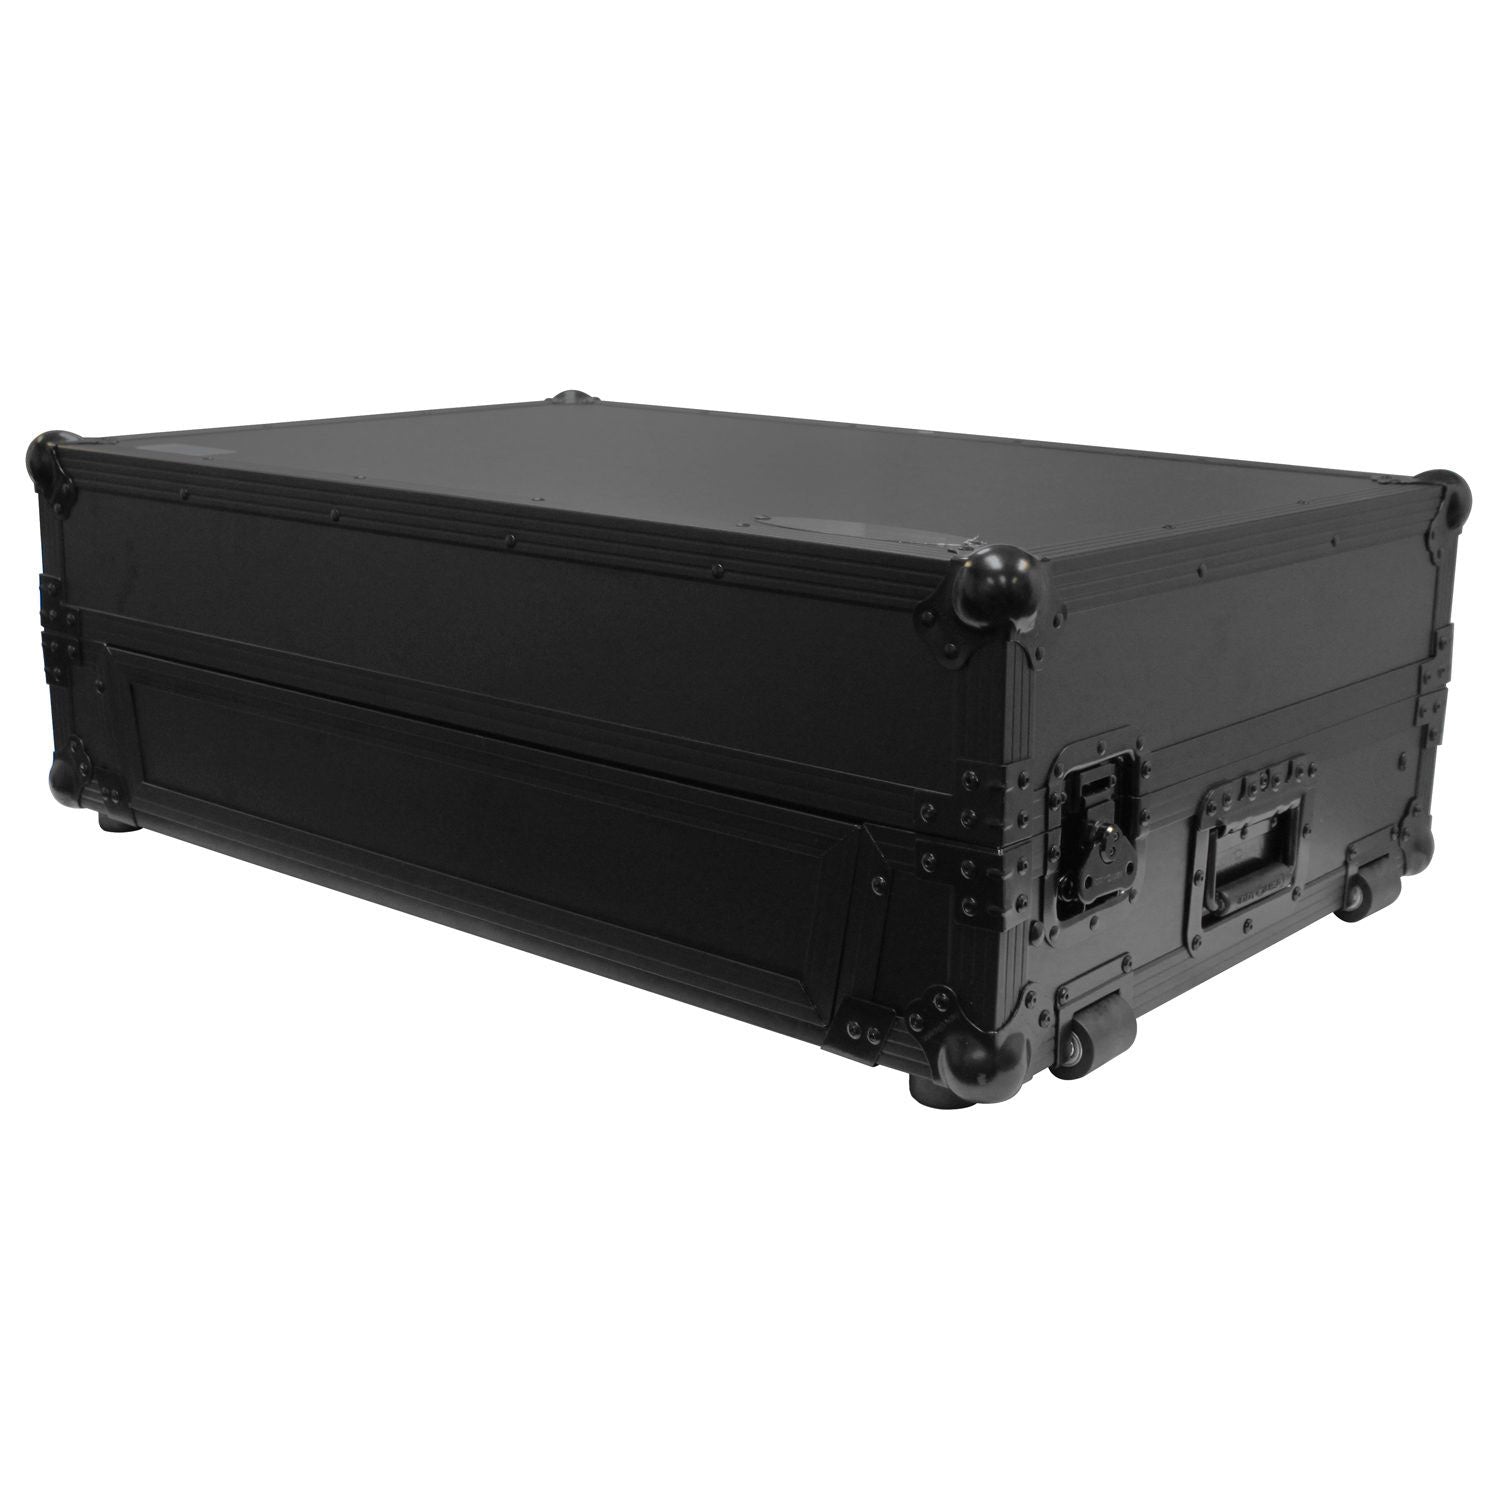 B-Stock: Odyssey FZGSMCX8000W2BL Flight Case for Denon MCX8000 DJ Controller with 2U Rack Space, Wheels, and Glide Platform - Black by Odyssey